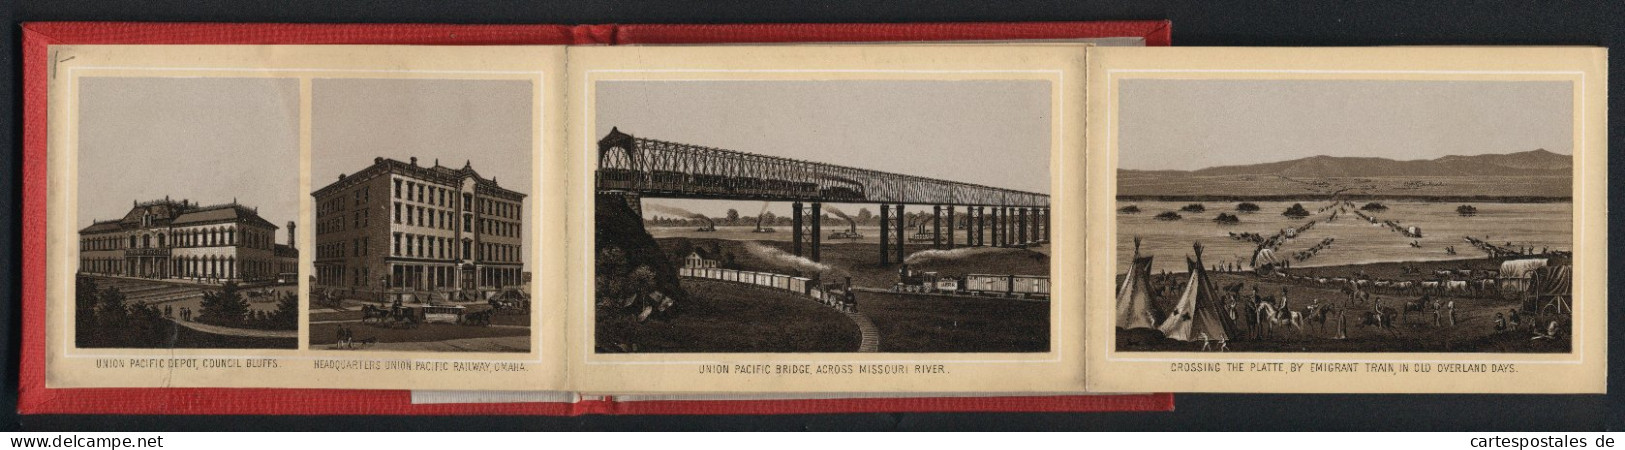 Leporello-Album Union Pacific Railwaymit 24 Lithographie-Ansichten, Headquarter Omaha, Weber Canon, Devils Gate, Ogden  - Lithografieën